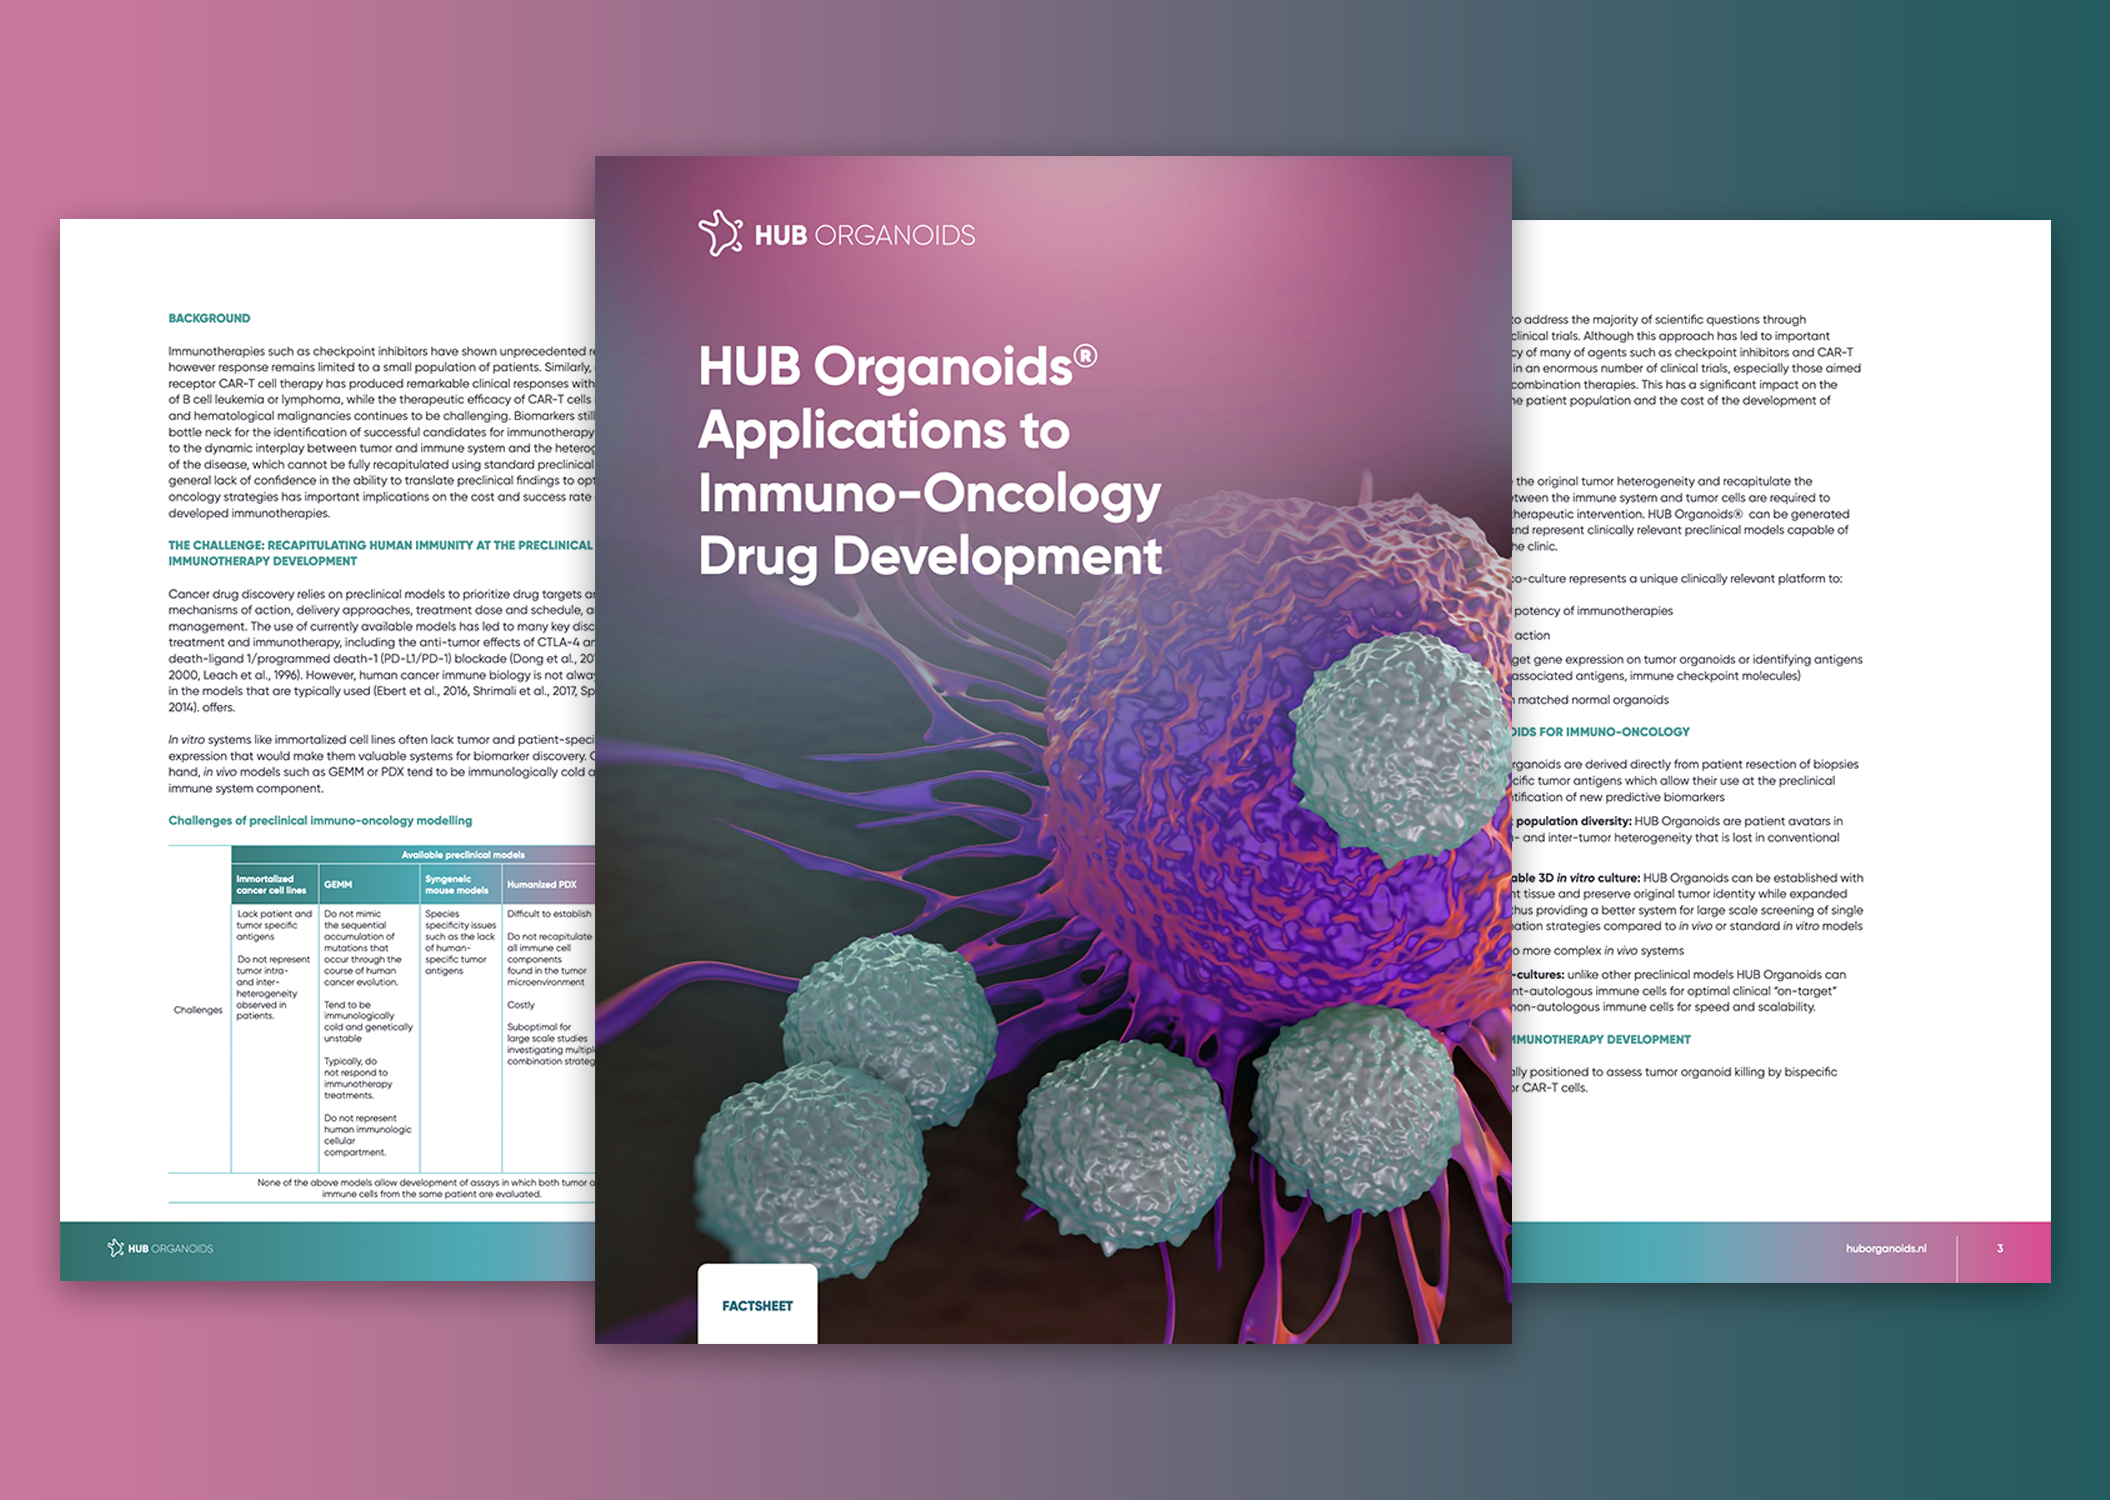 Application of HUB Organoids in immuno-oncology drug development